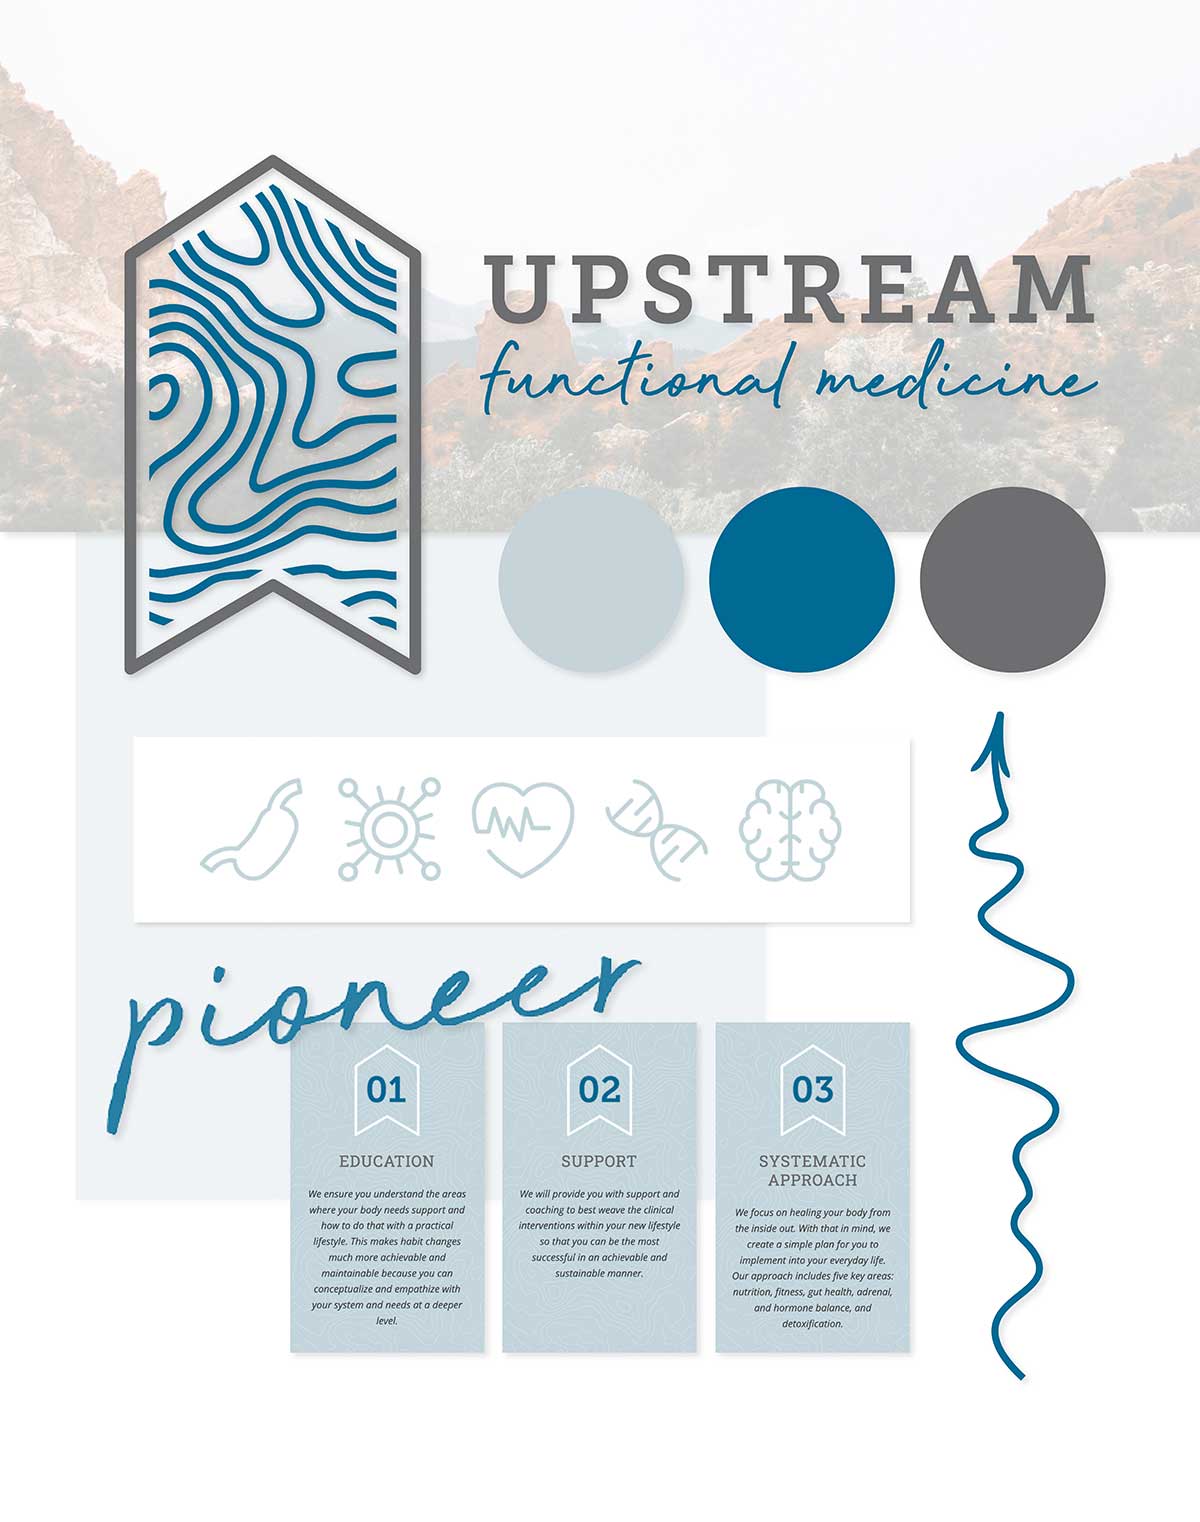 Upstream Functional Medicine Portfolio Brand